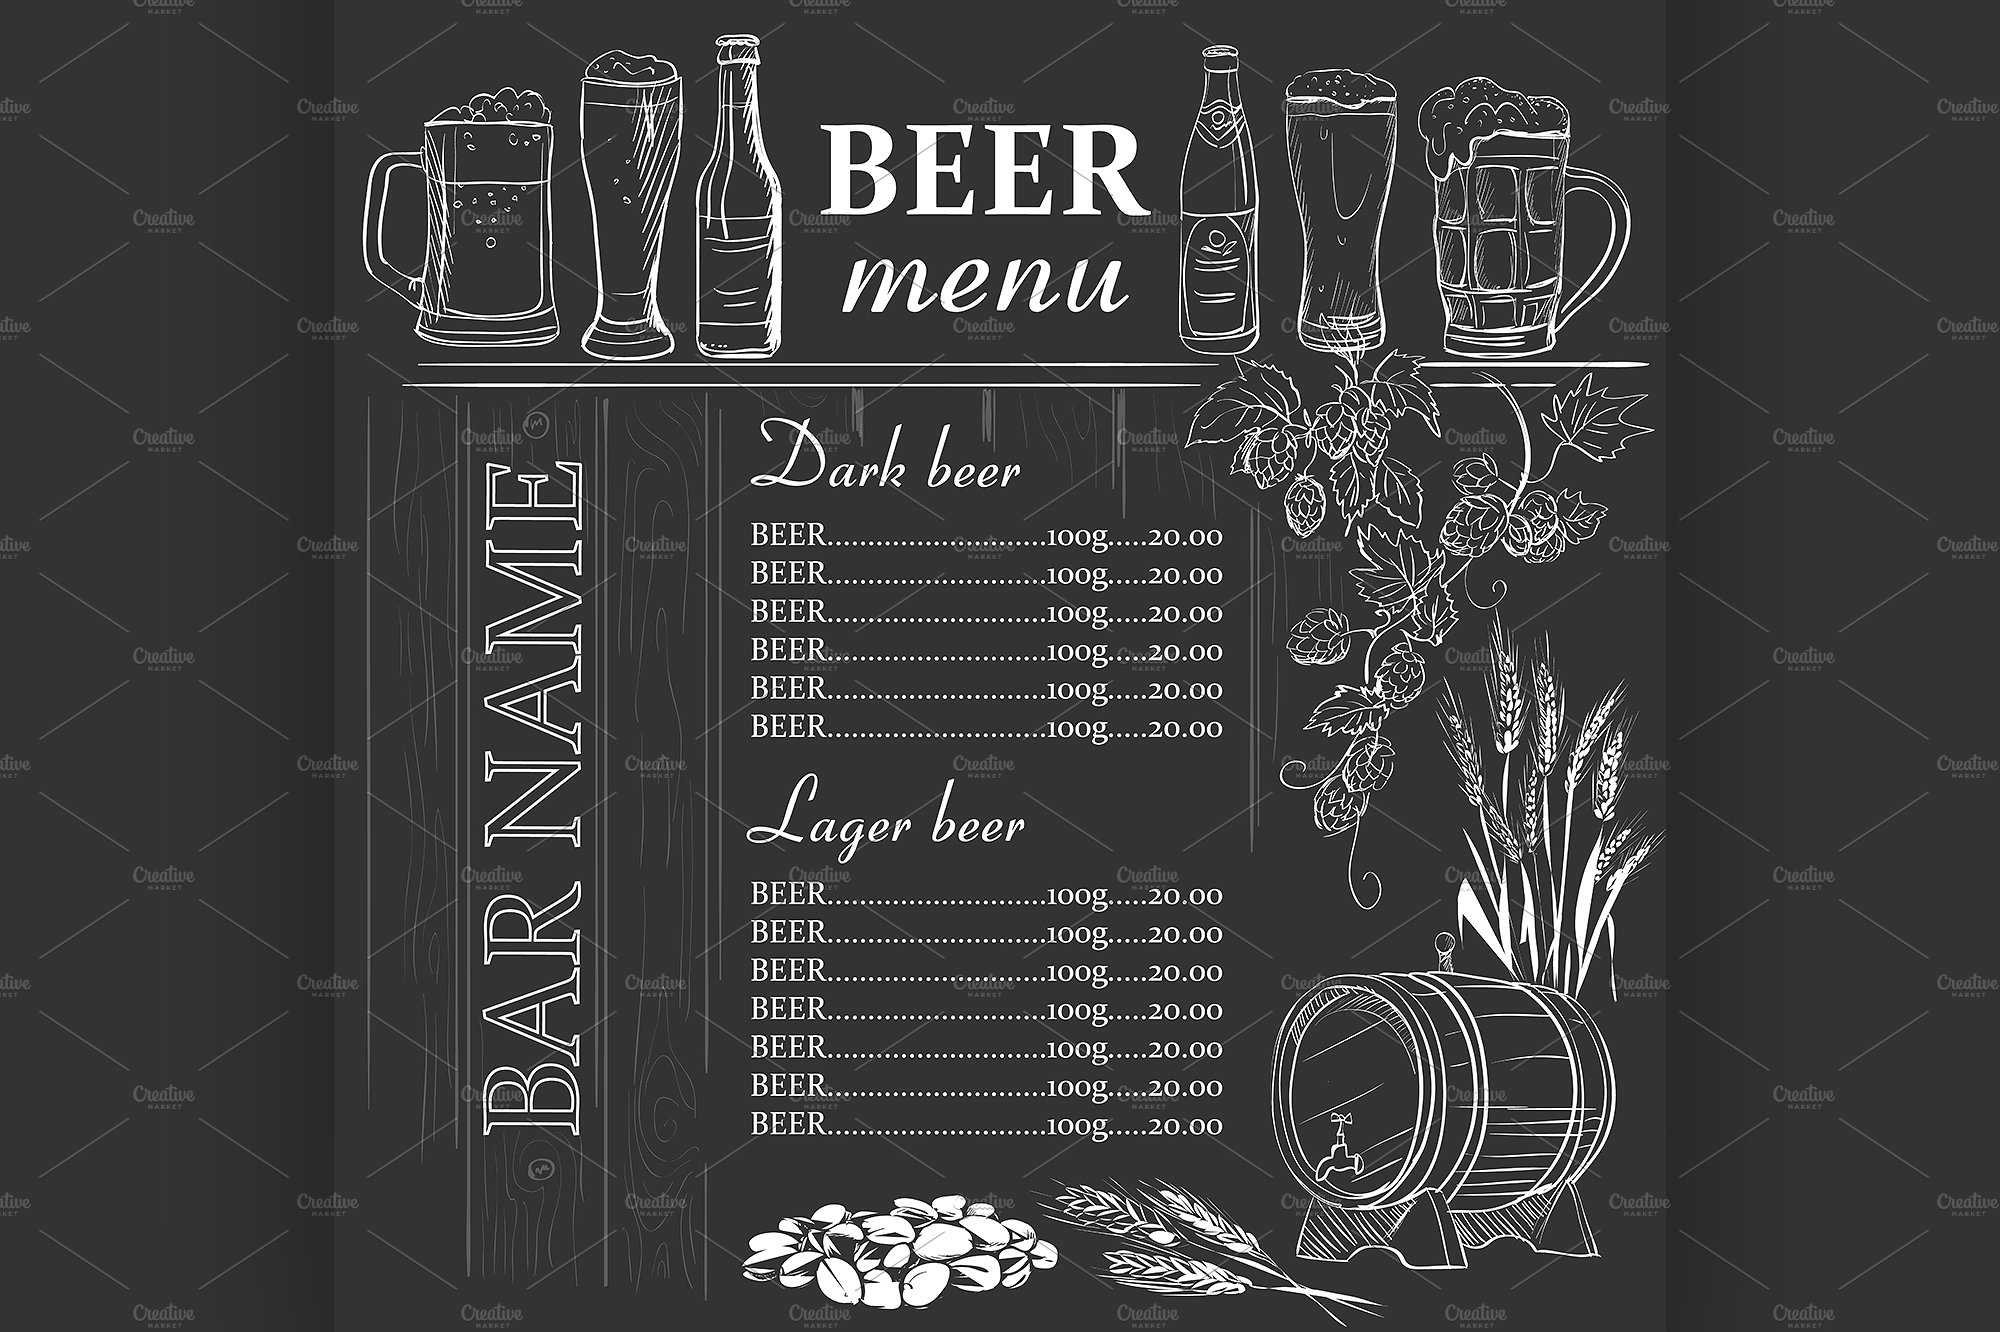 Beer menu hand drawn on chalkboard ~ Illustrations ~ Creative Market